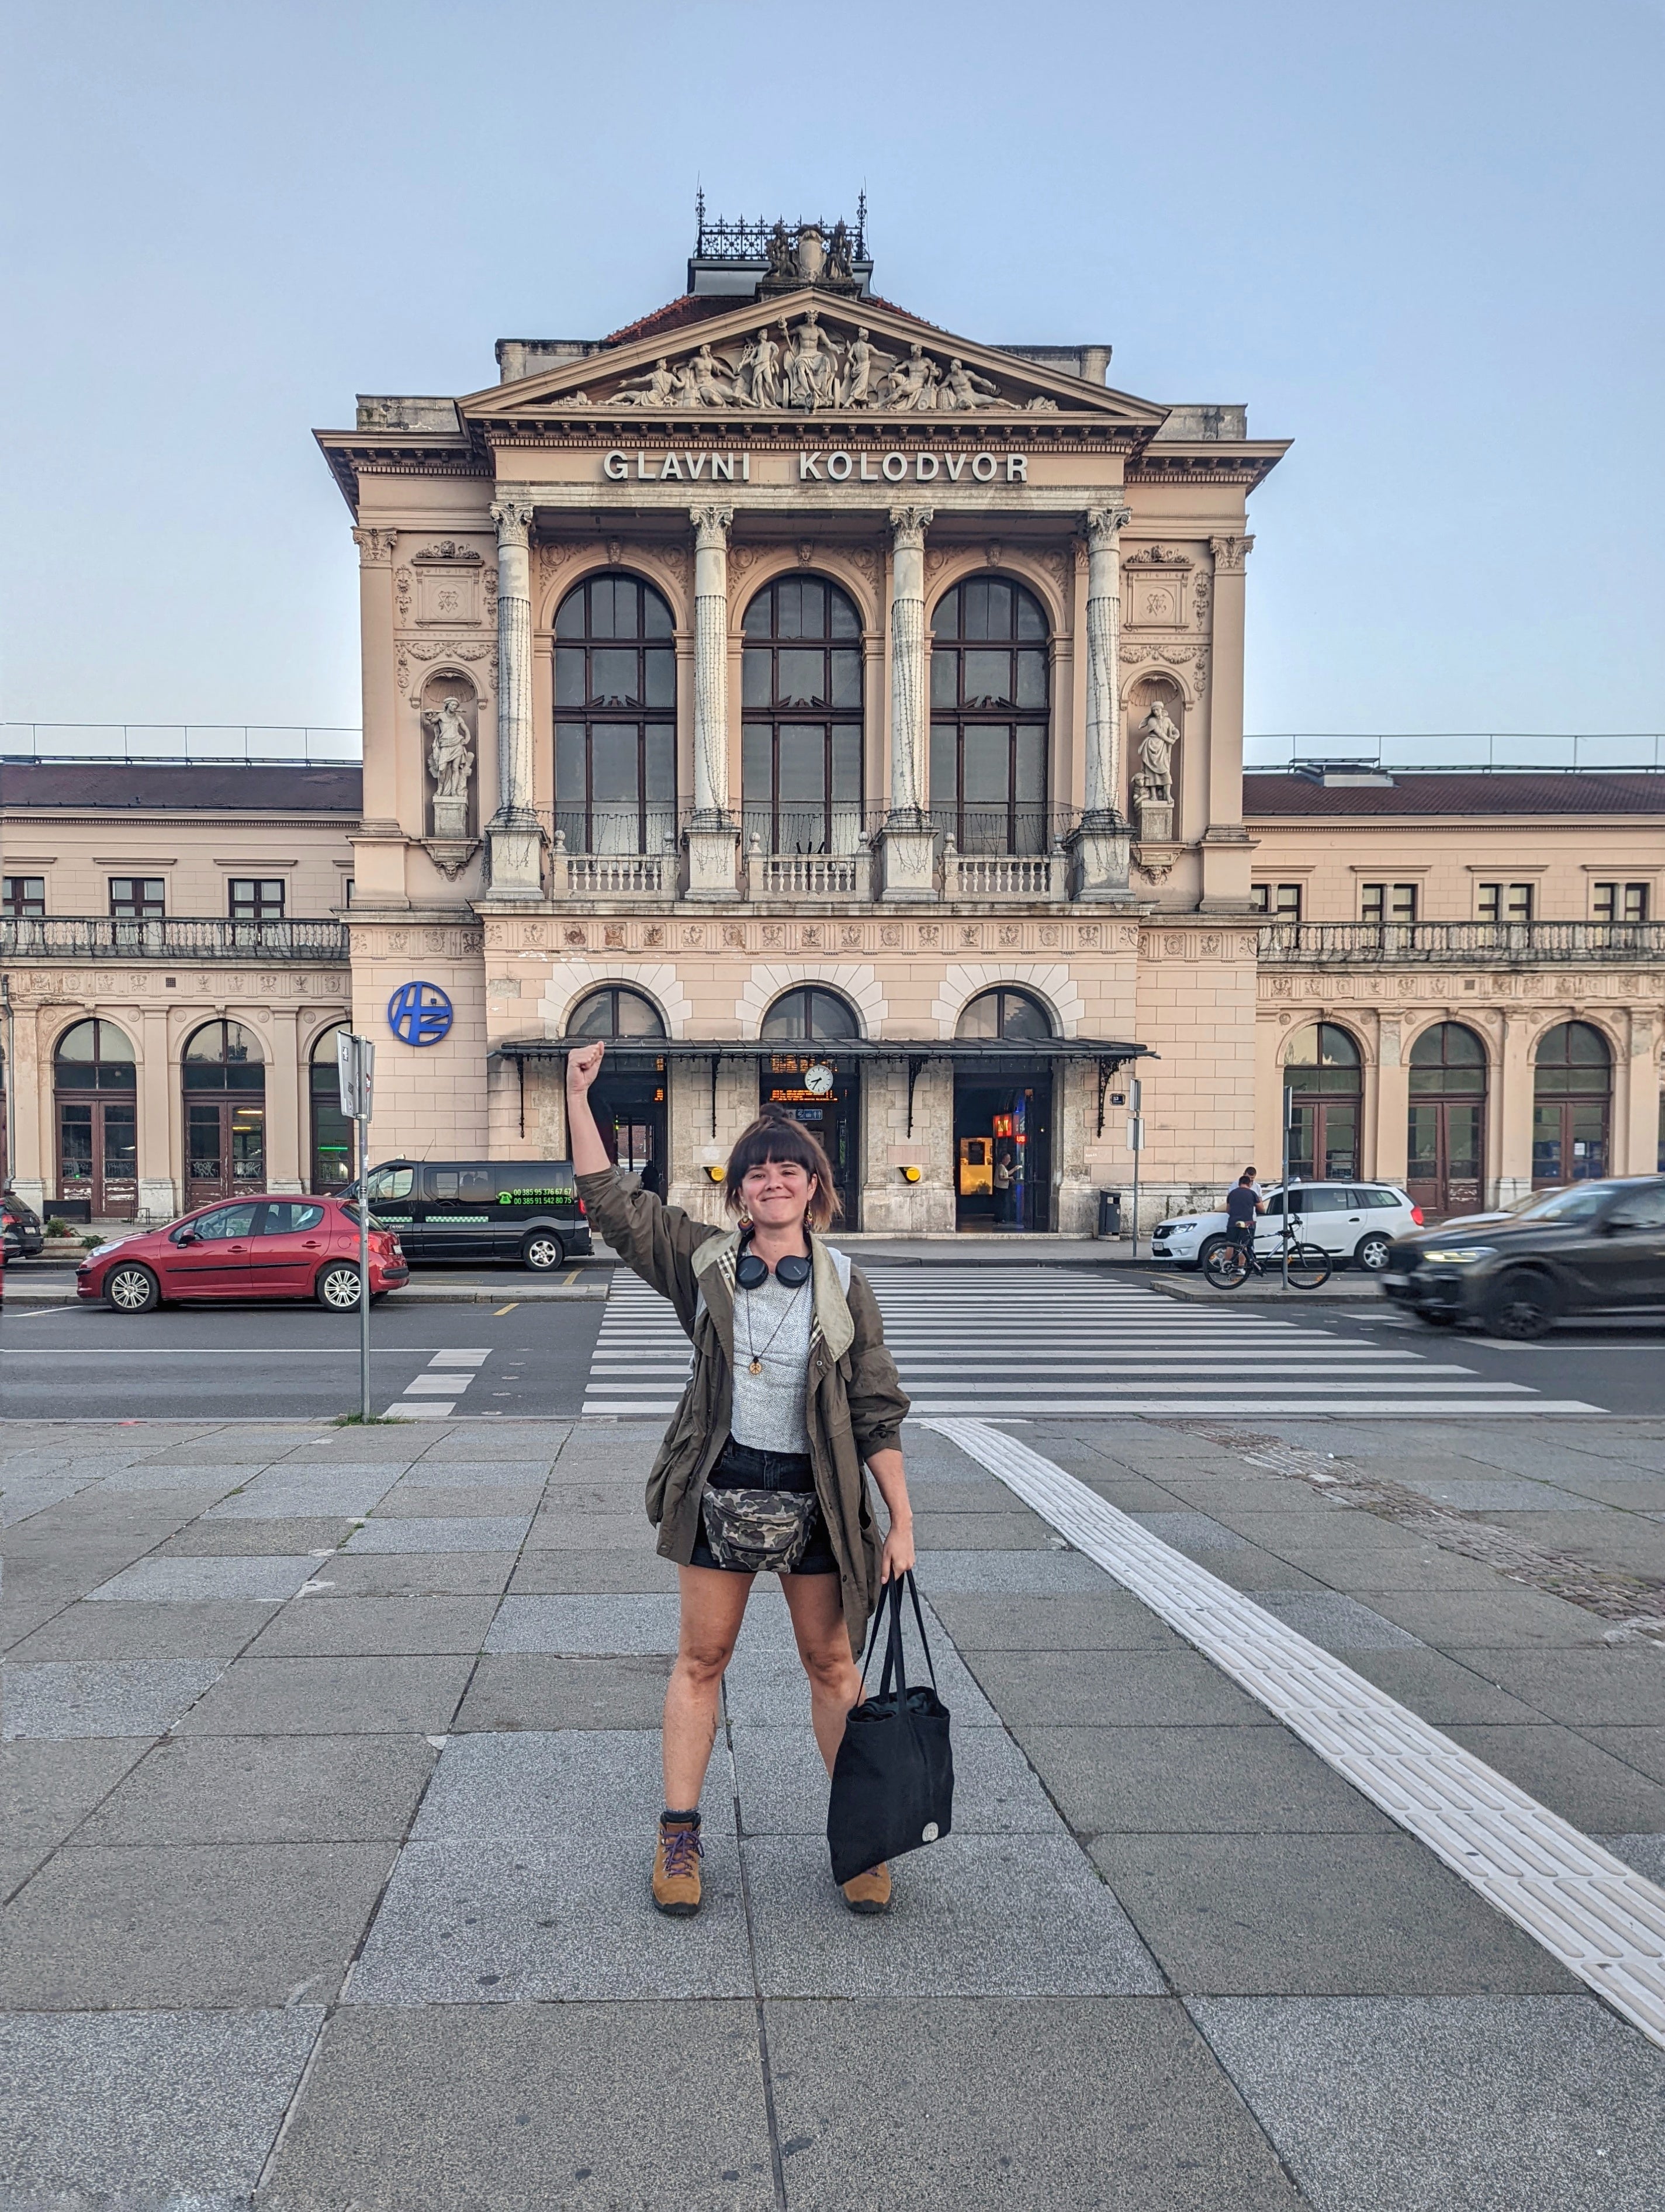 Lucie outside Zagreb’s Glavni Kolodvor station